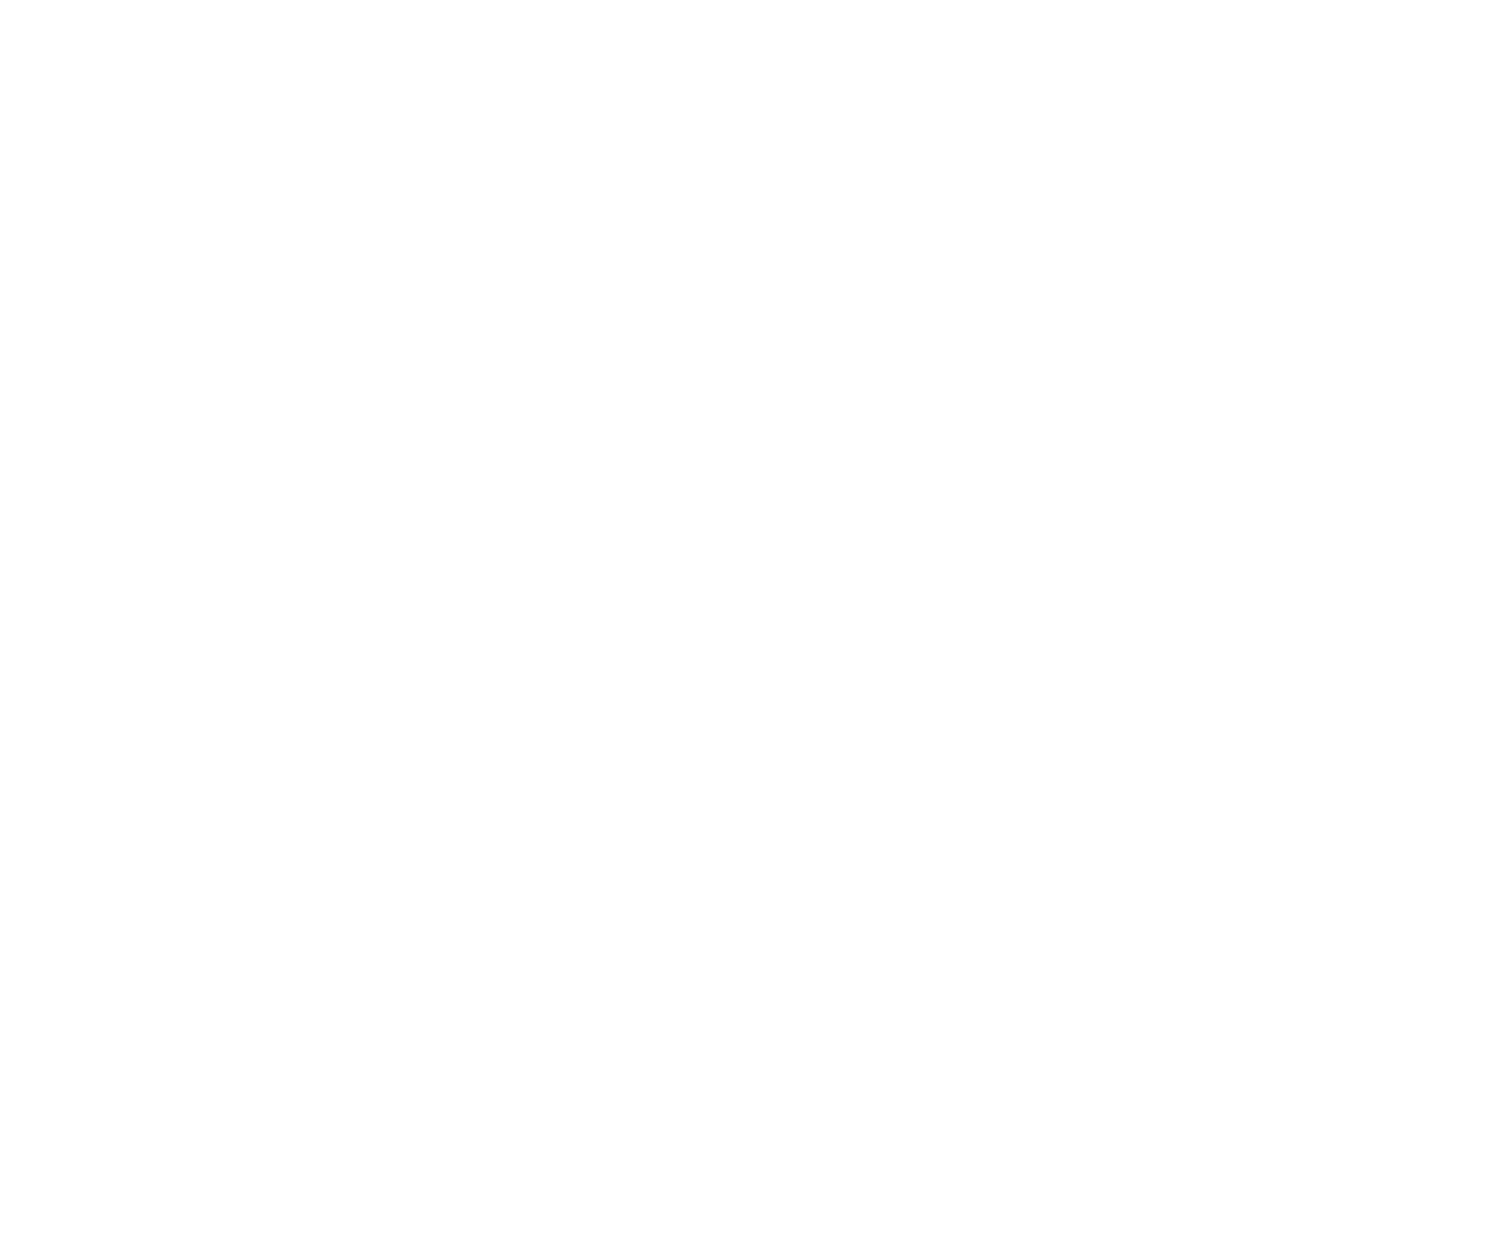 BCRCC